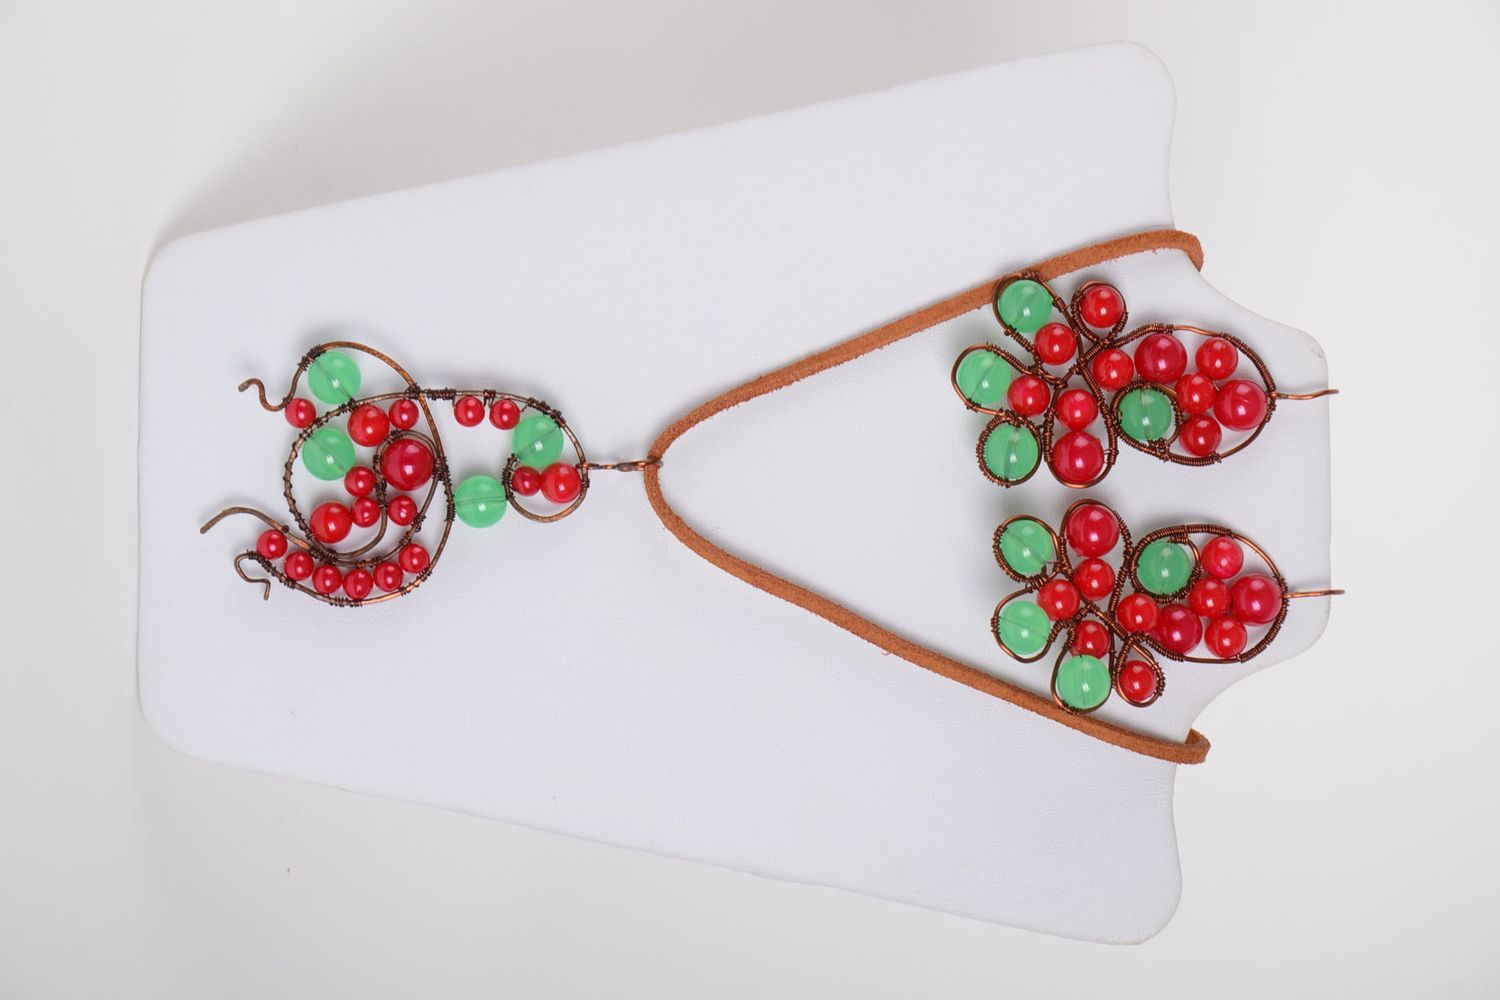 Handmade earrings and unusual pendant in set of 2 items designer jewelry photo 2